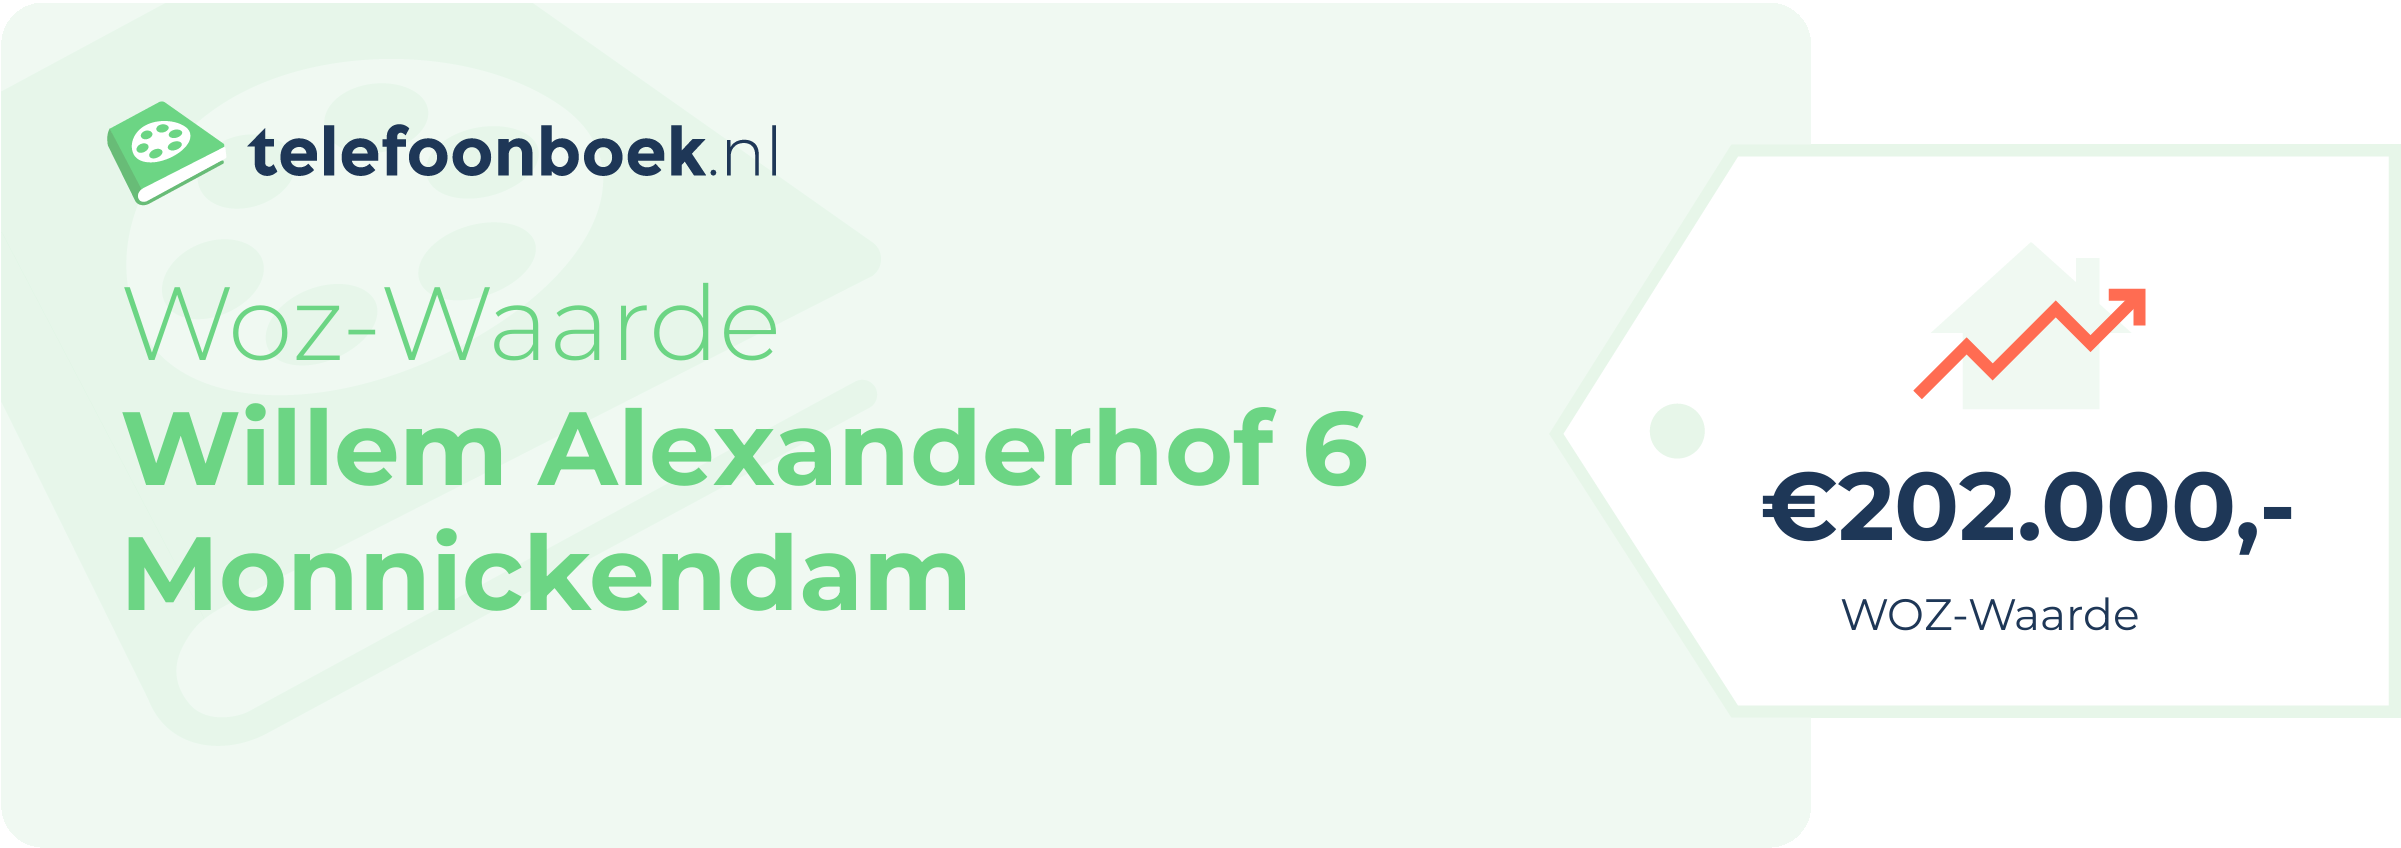 WOZ-waarde Willem Alexanderhof 6 Monnickendam